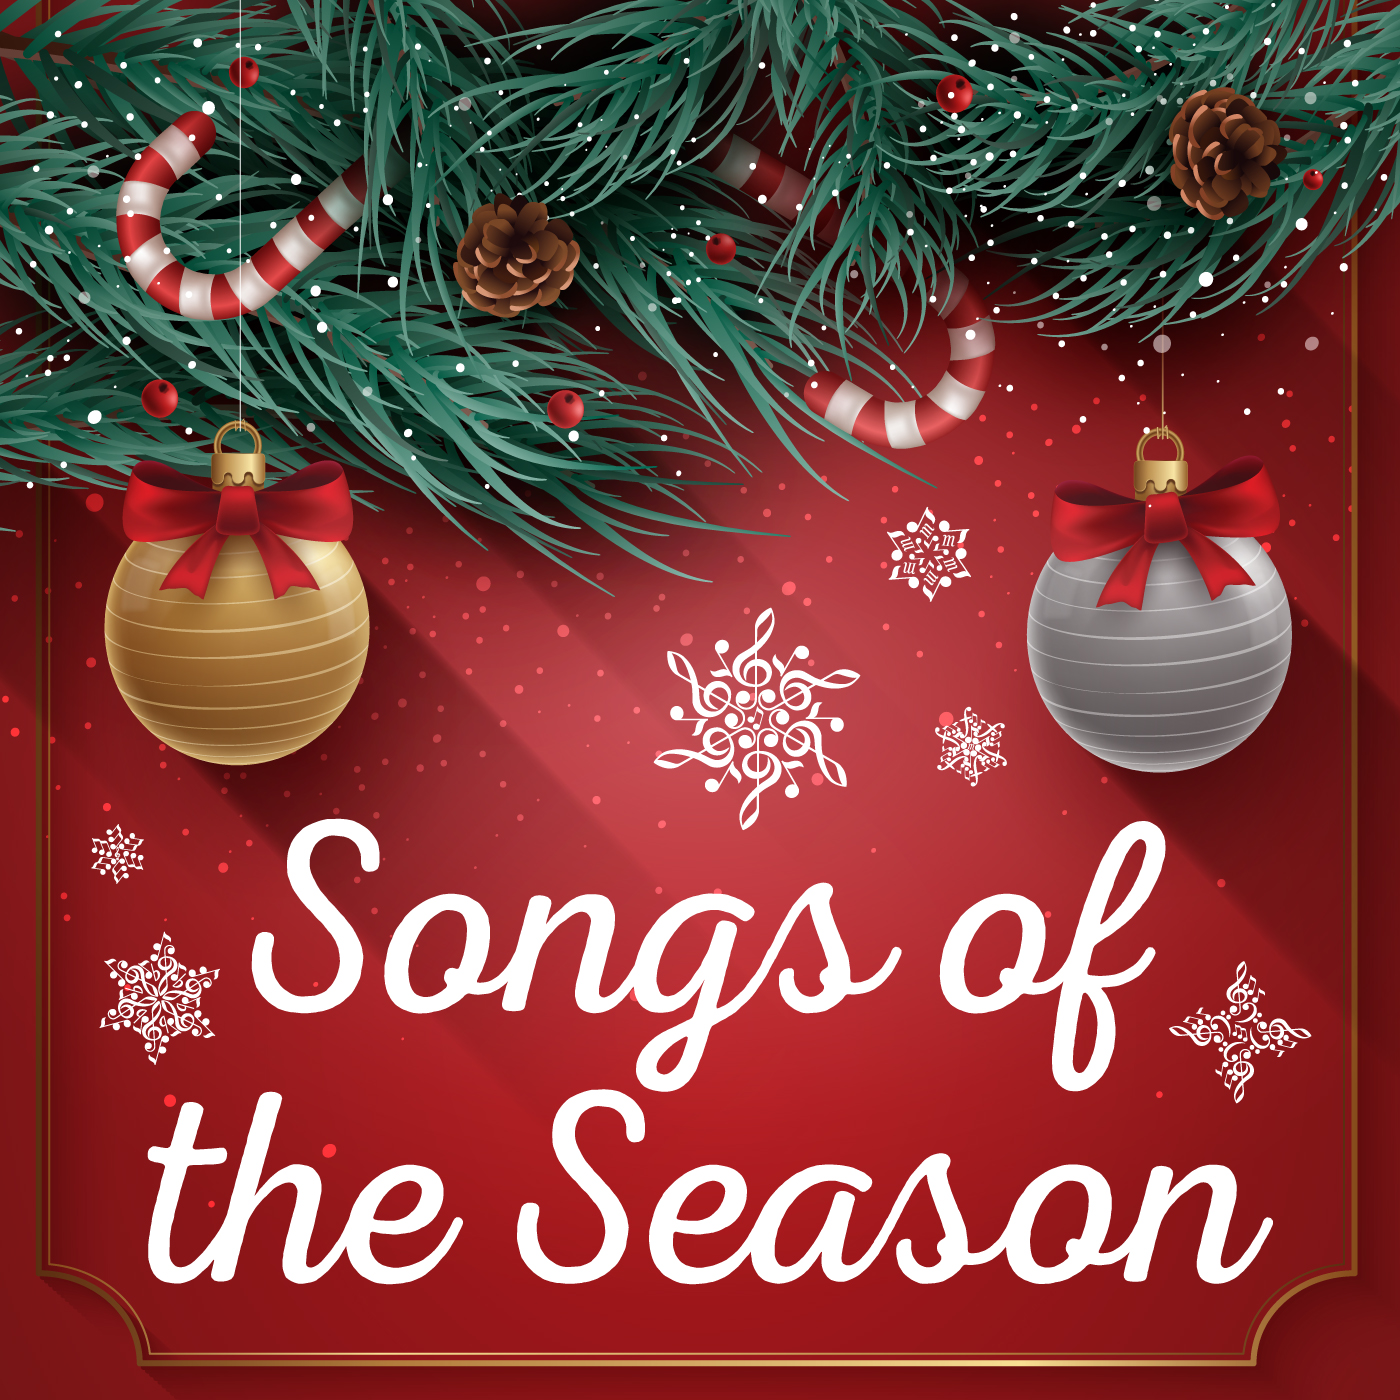 Songs Of The Season - Mary's Joyful Song - Chris Wall - 12-8-2019